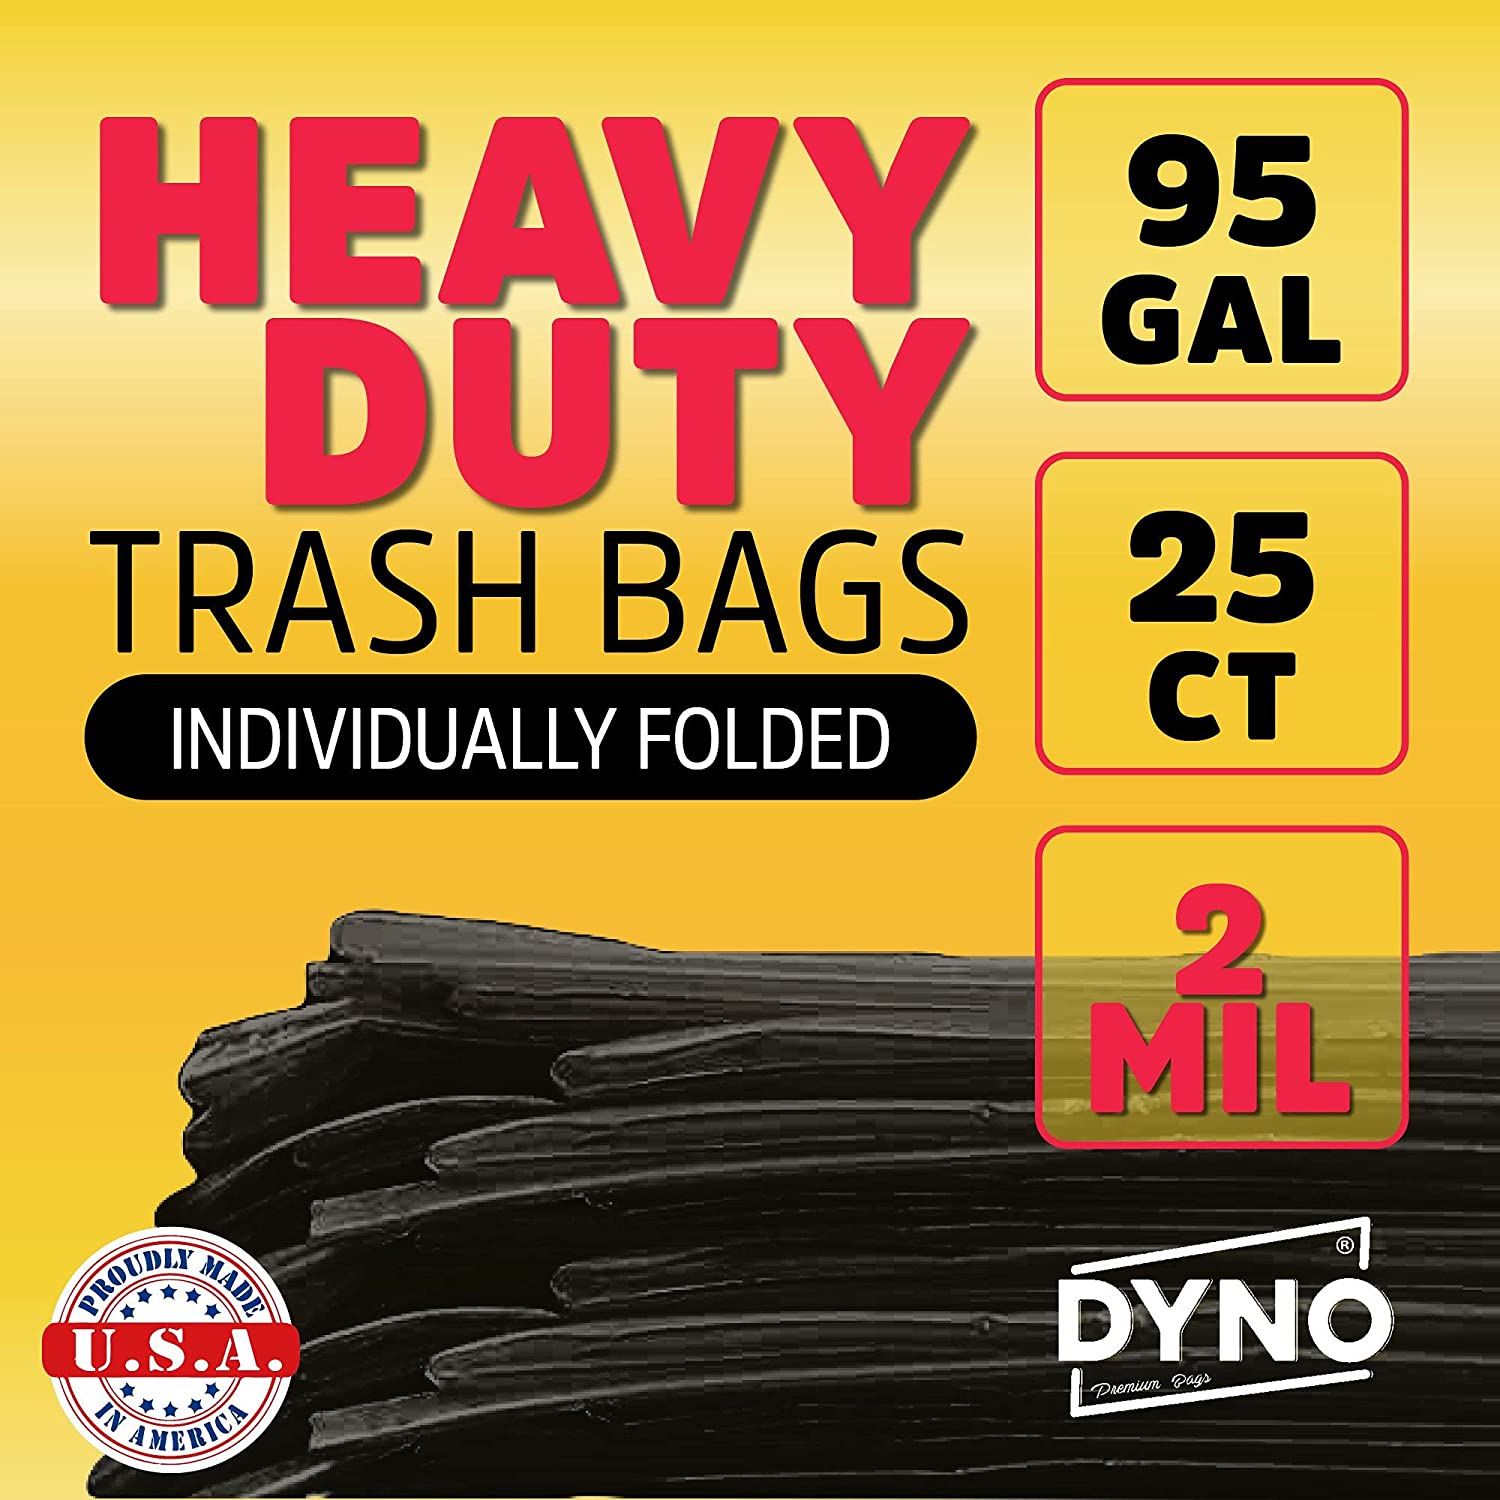 95 Gallon Trash Bags, 96 Gallon Trash Bags